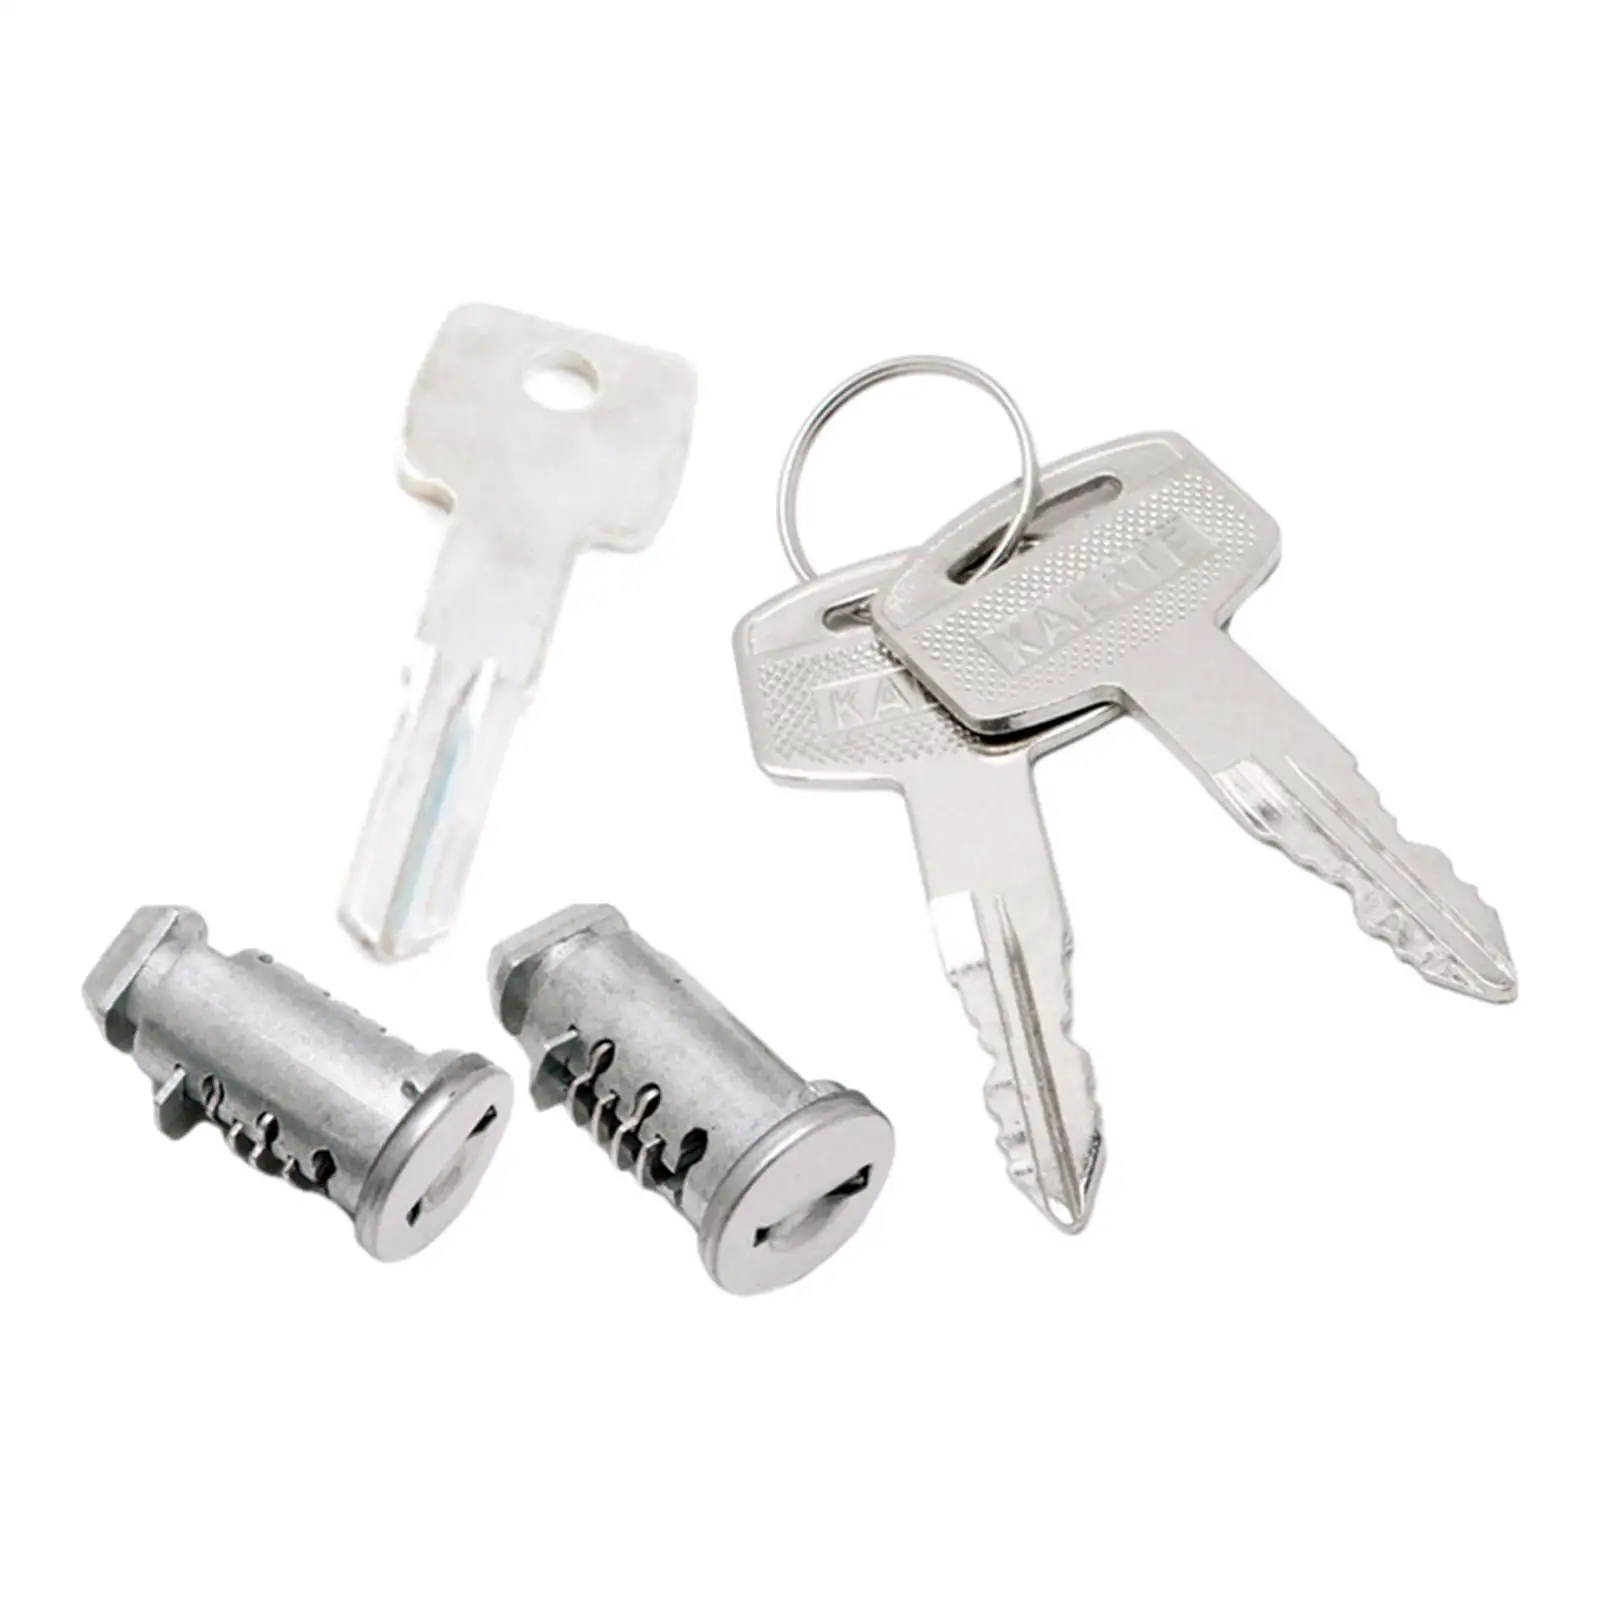 2 Pieces Lock Cylindes Cross Bars Locks and Key Kit for Car Rack Locks